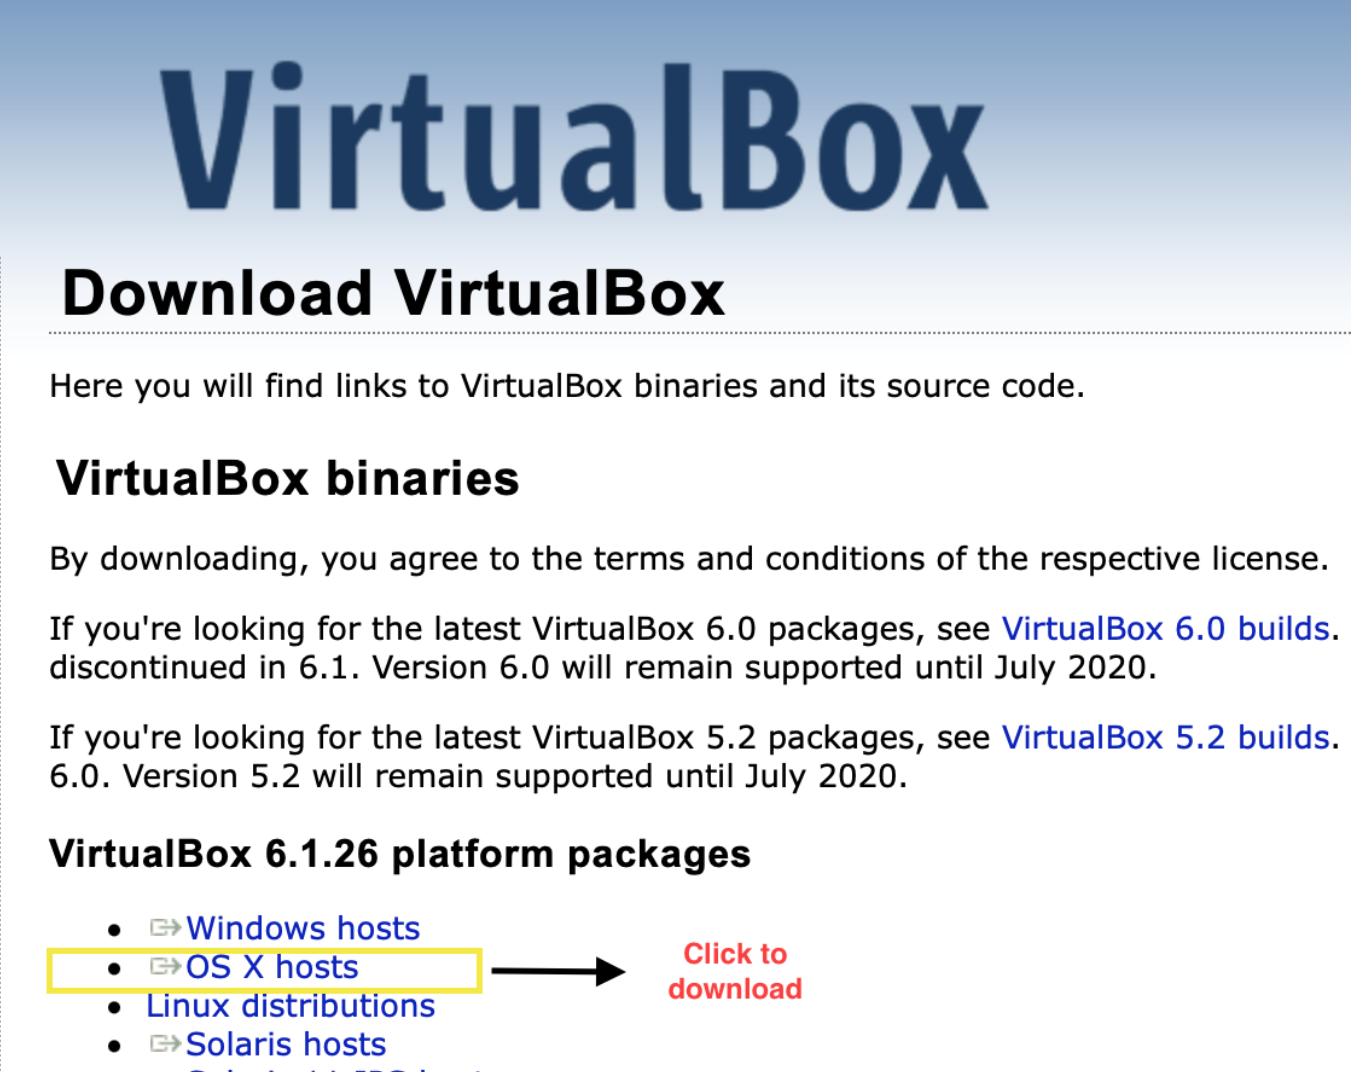 setup windows 10 virtualbox for mac